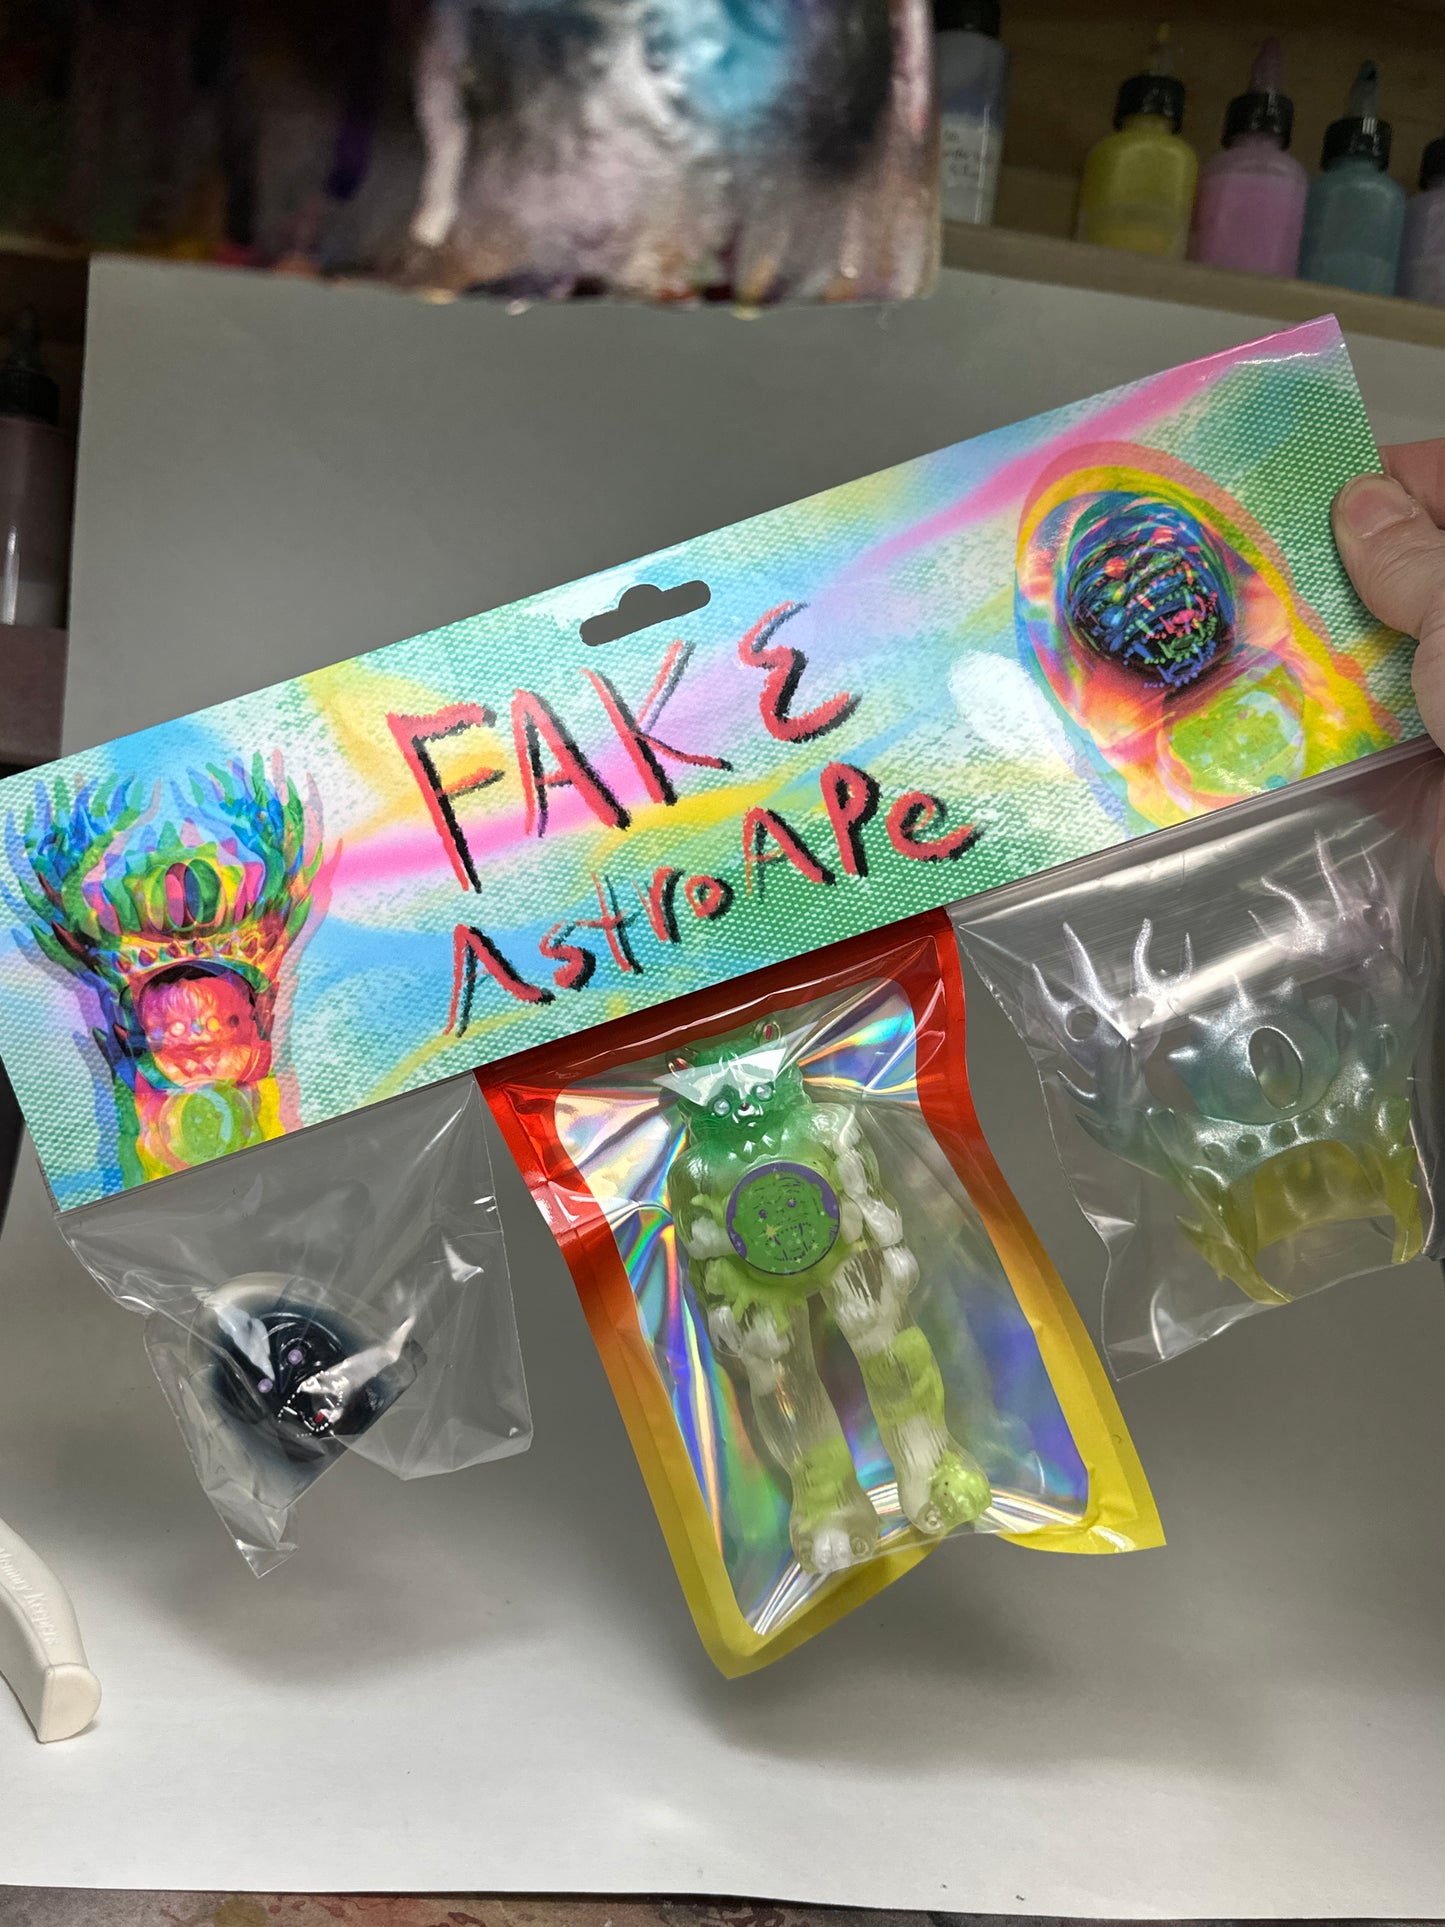 FAKE AstroApe: Radioactive Babies and Bones